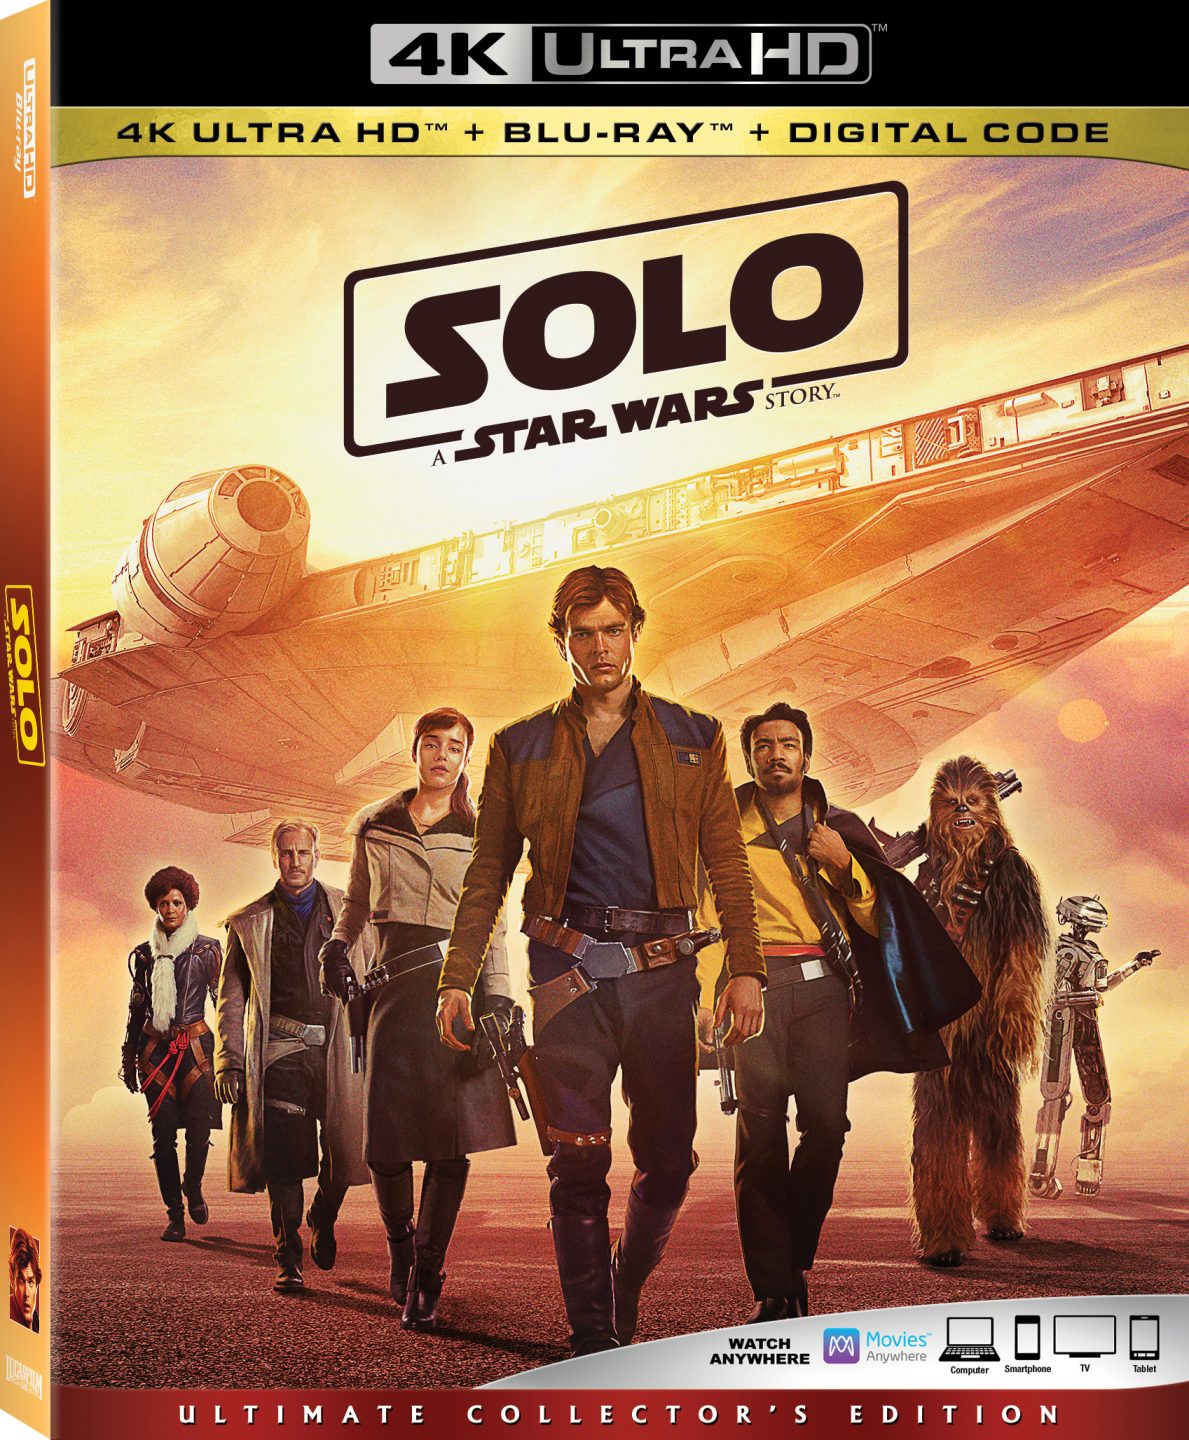 Solo: A Star Wars Story 4K UHD cover (Walt Disney Studios Home Entertainment)